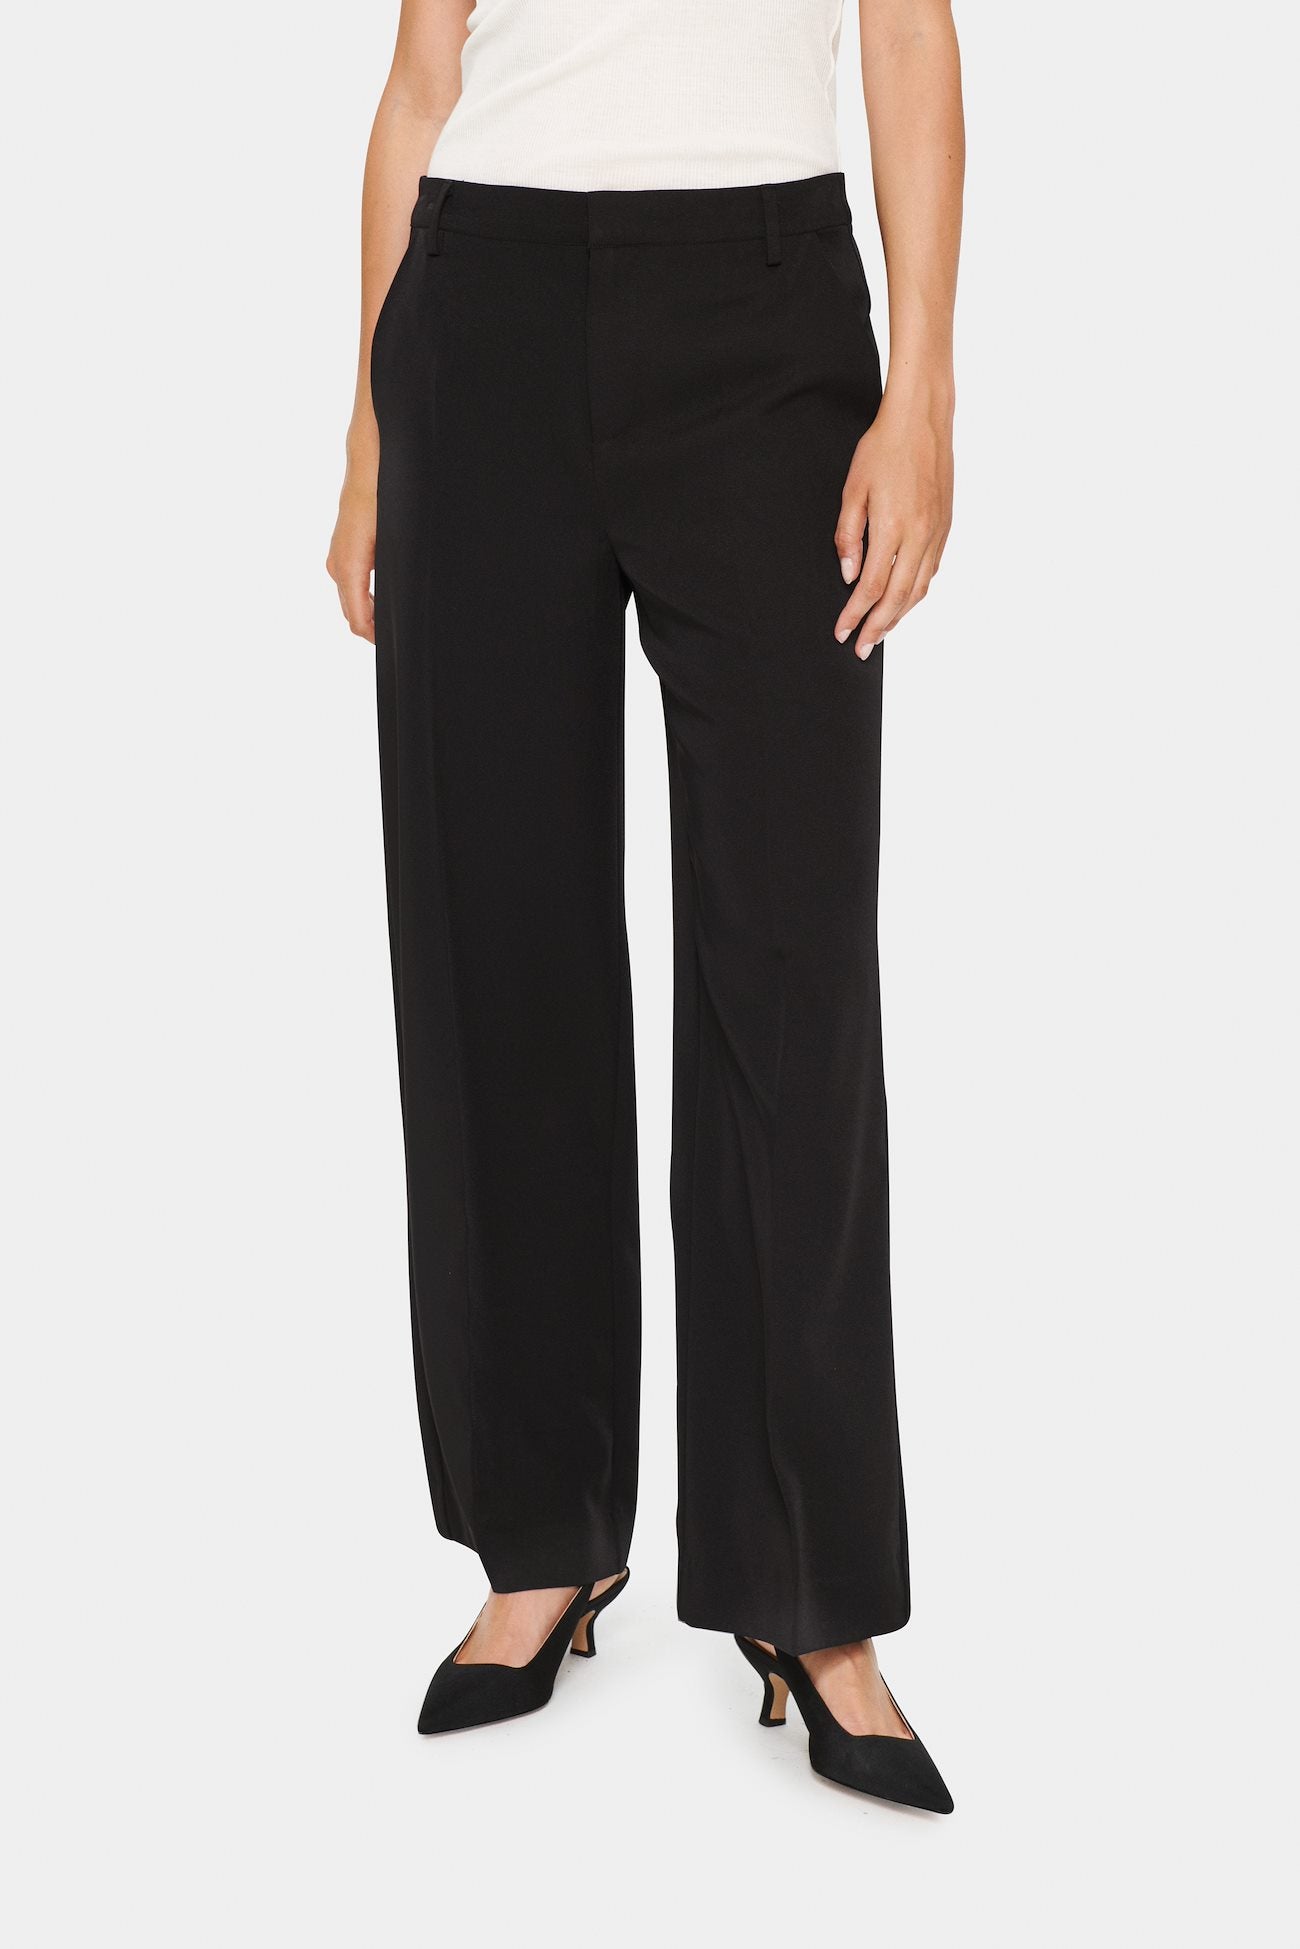 Black Rowan Pants - Sleek Style for Any Occasion · Blue Sky Clothing ...